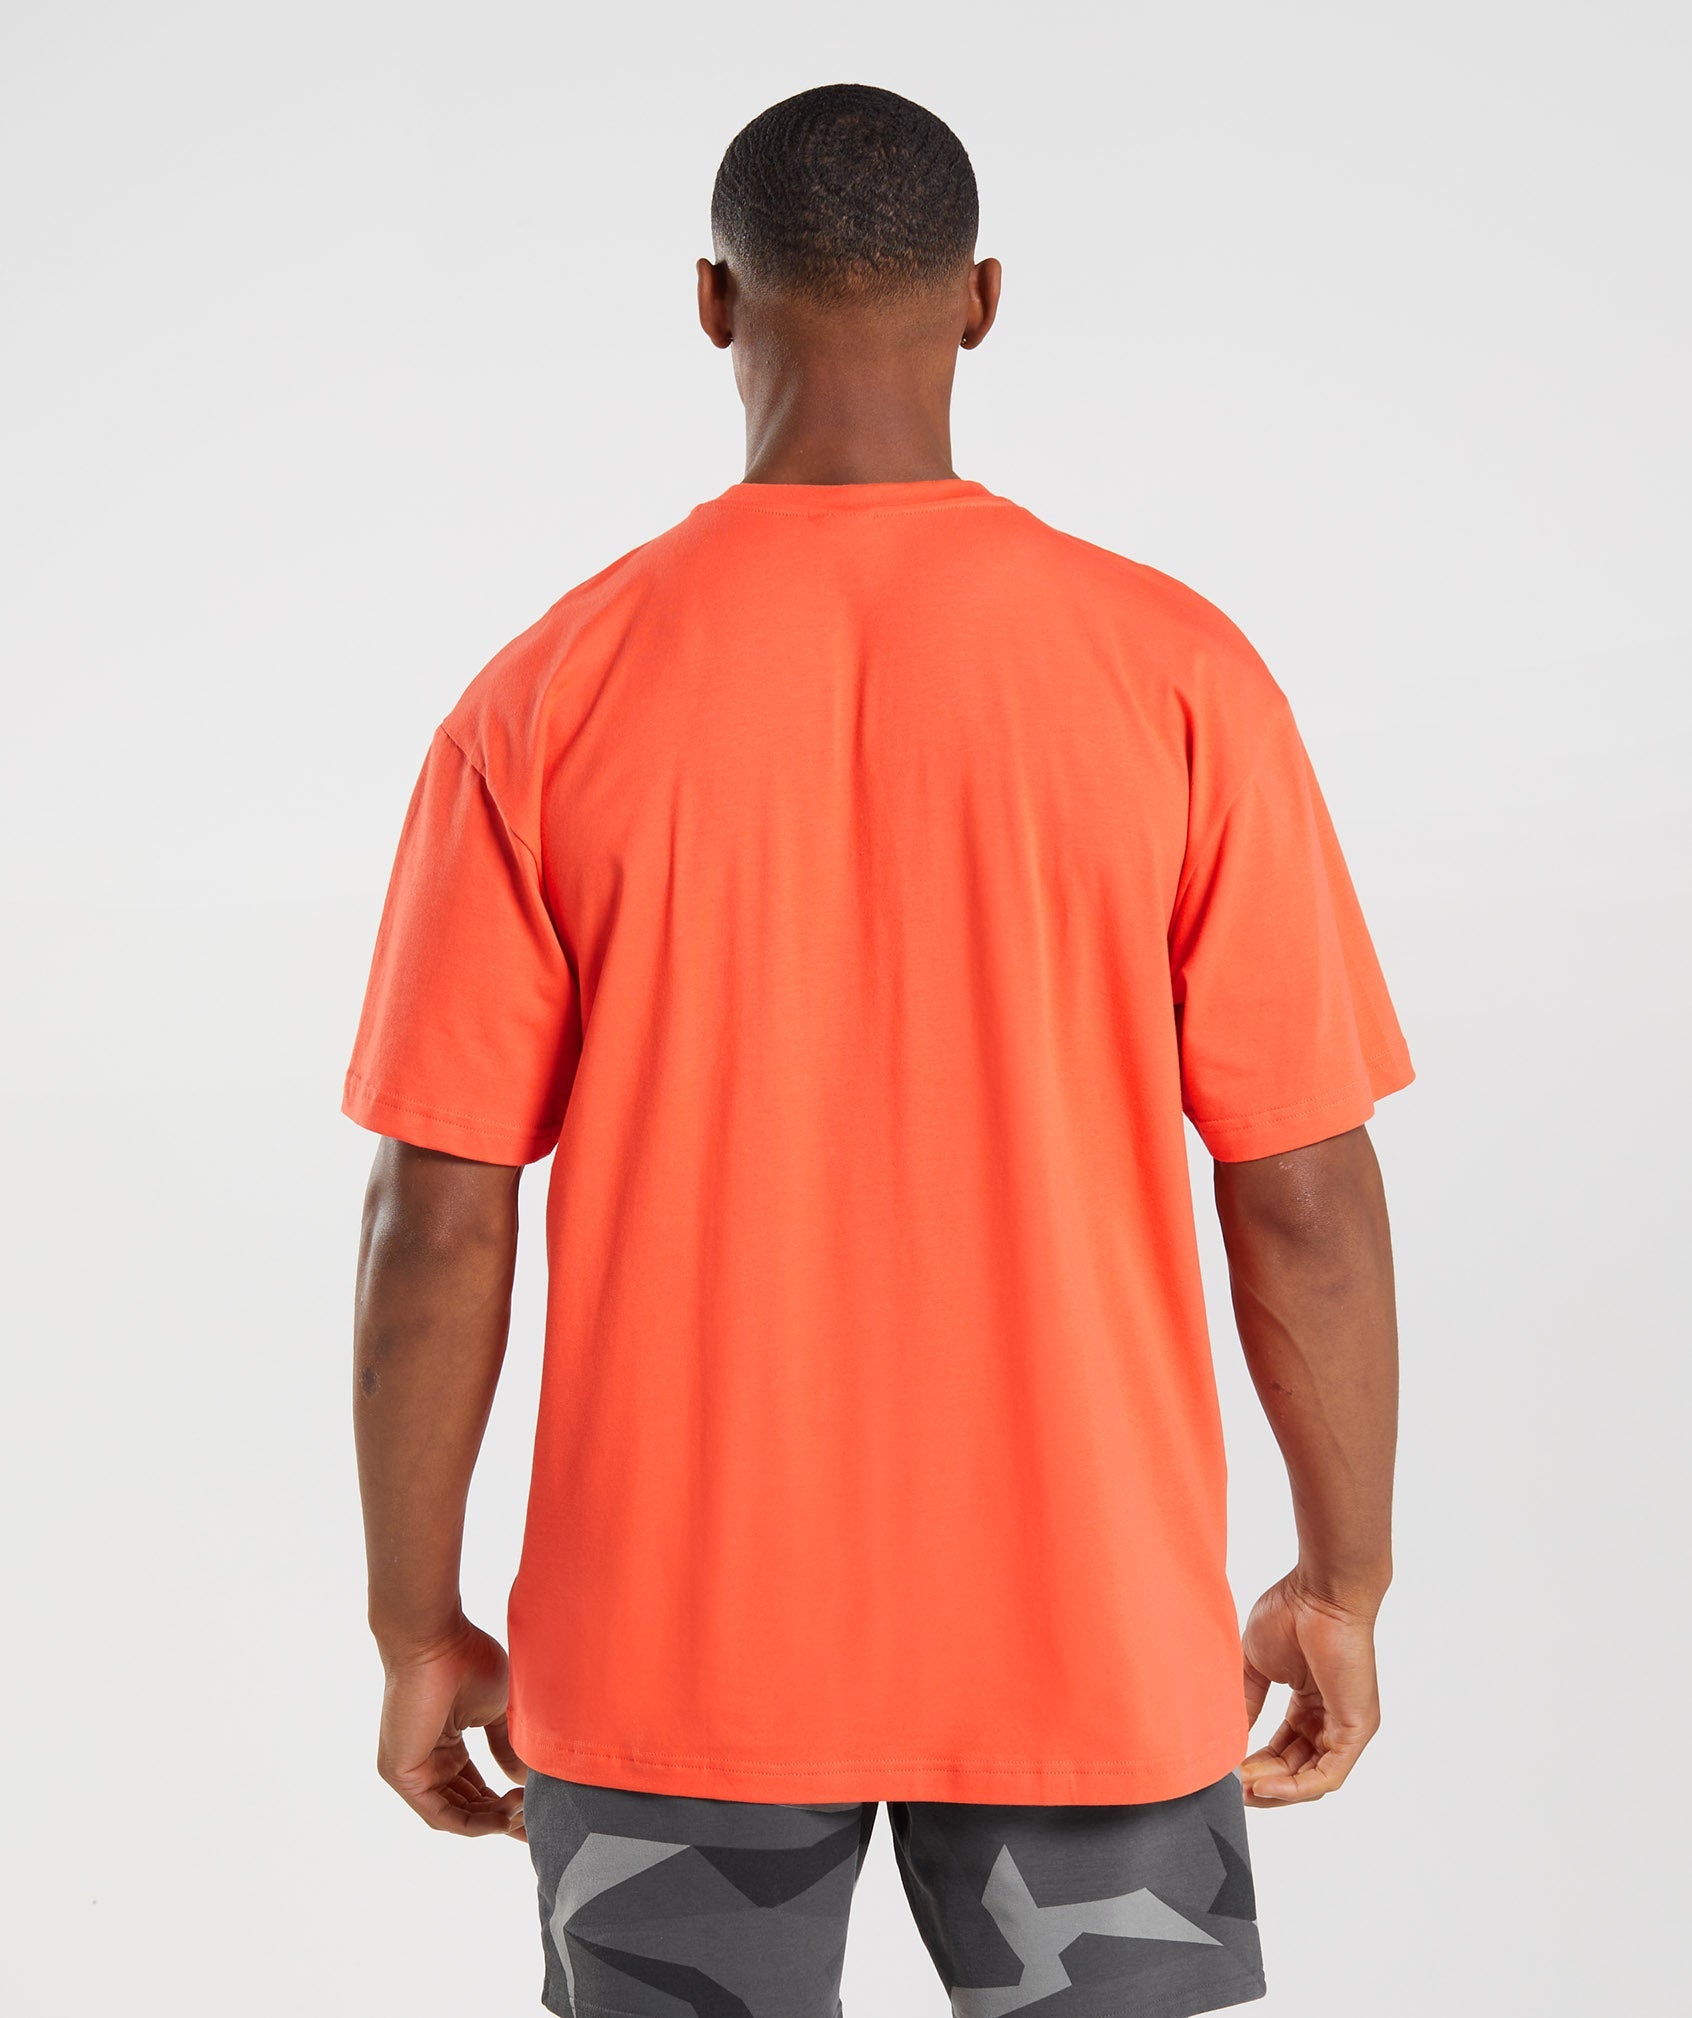 Apollo Infill Oversized T-Shirt in Papaya Orange - view 2